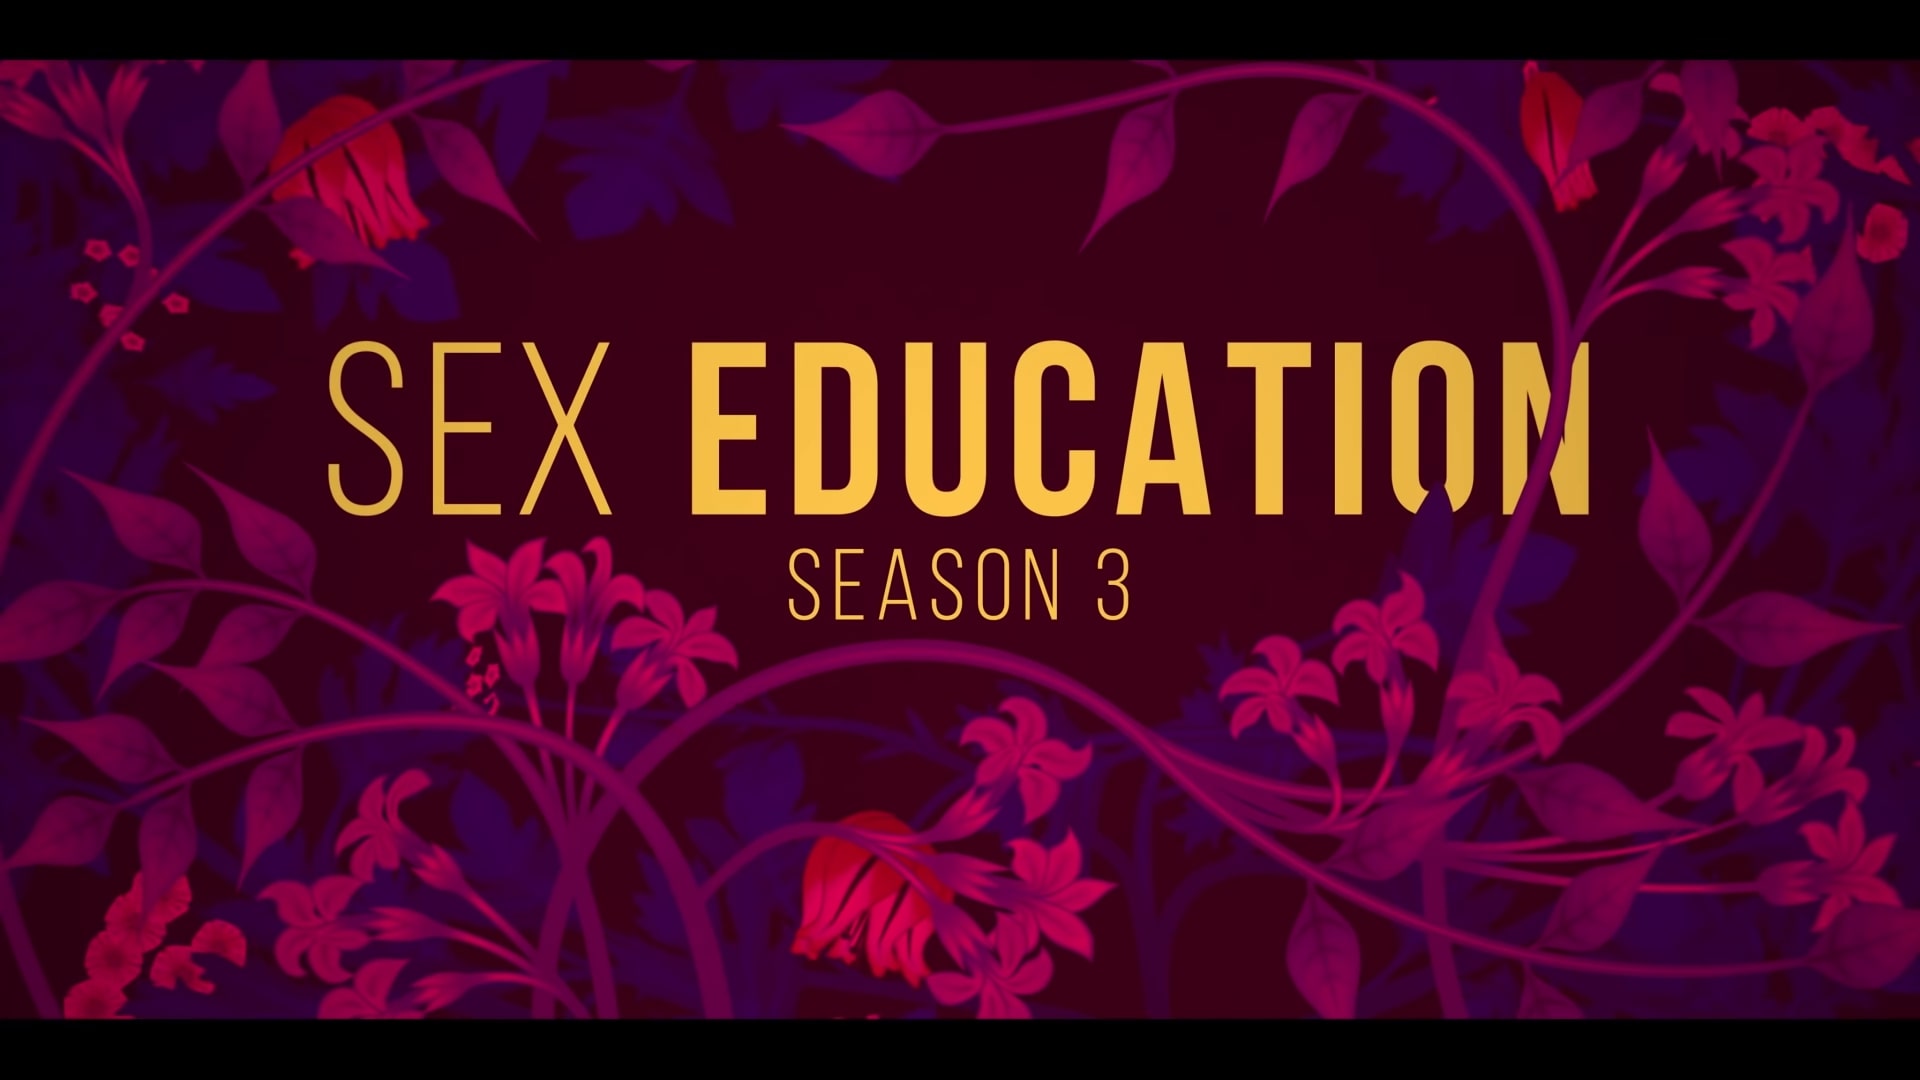 Netflix Sex Education Season 3 Trailer, Coming to Netflix in September 2021